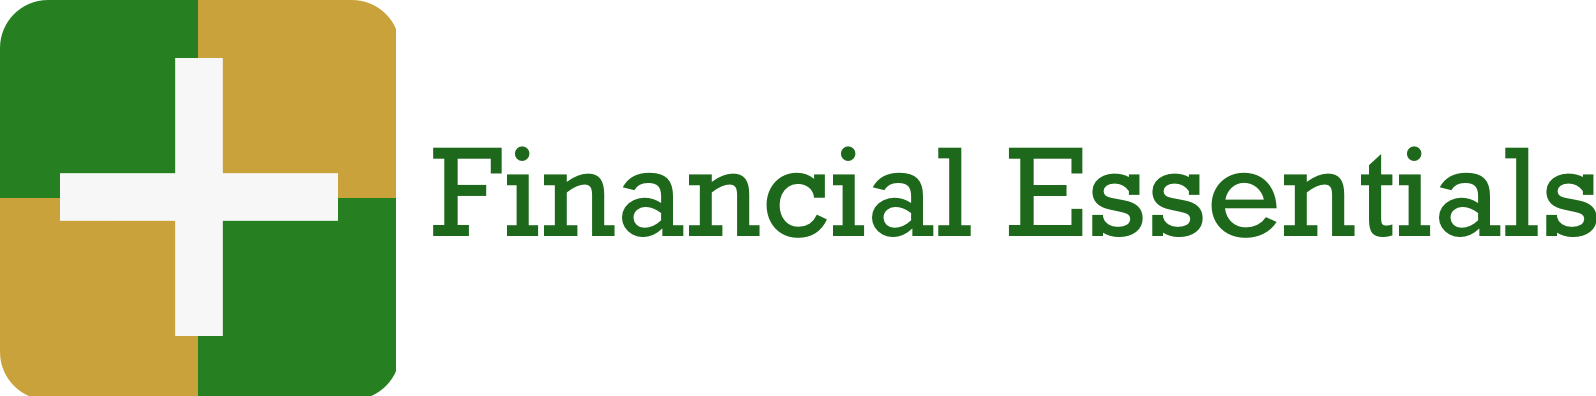 Logo + Logotype Financial Essentials.png